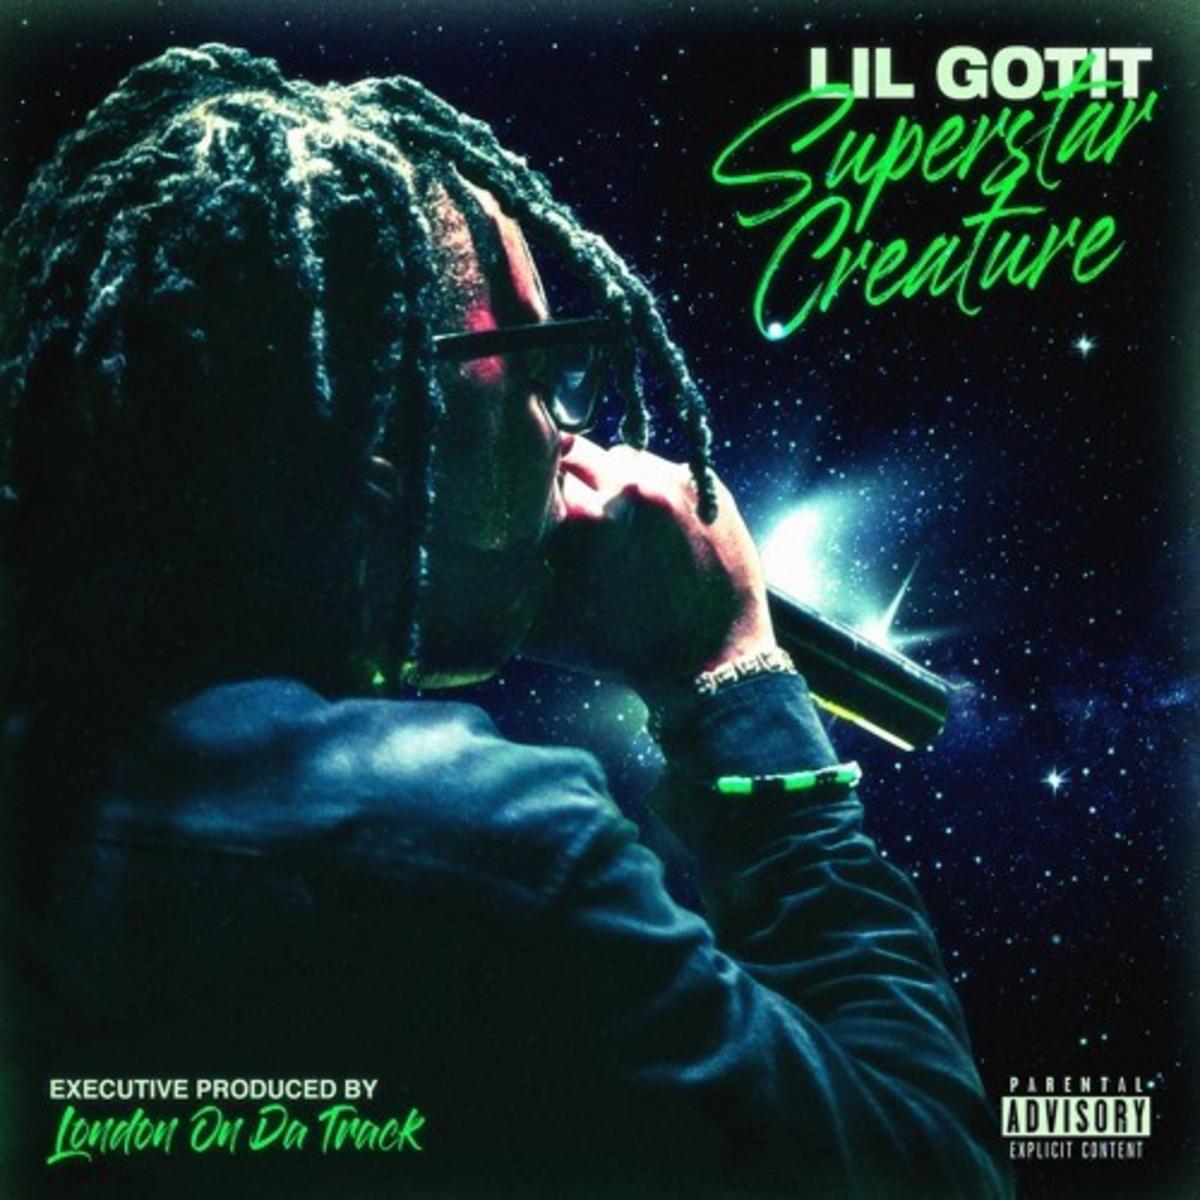 Lil Gotit – “Superstar Creature” [Mixtape]